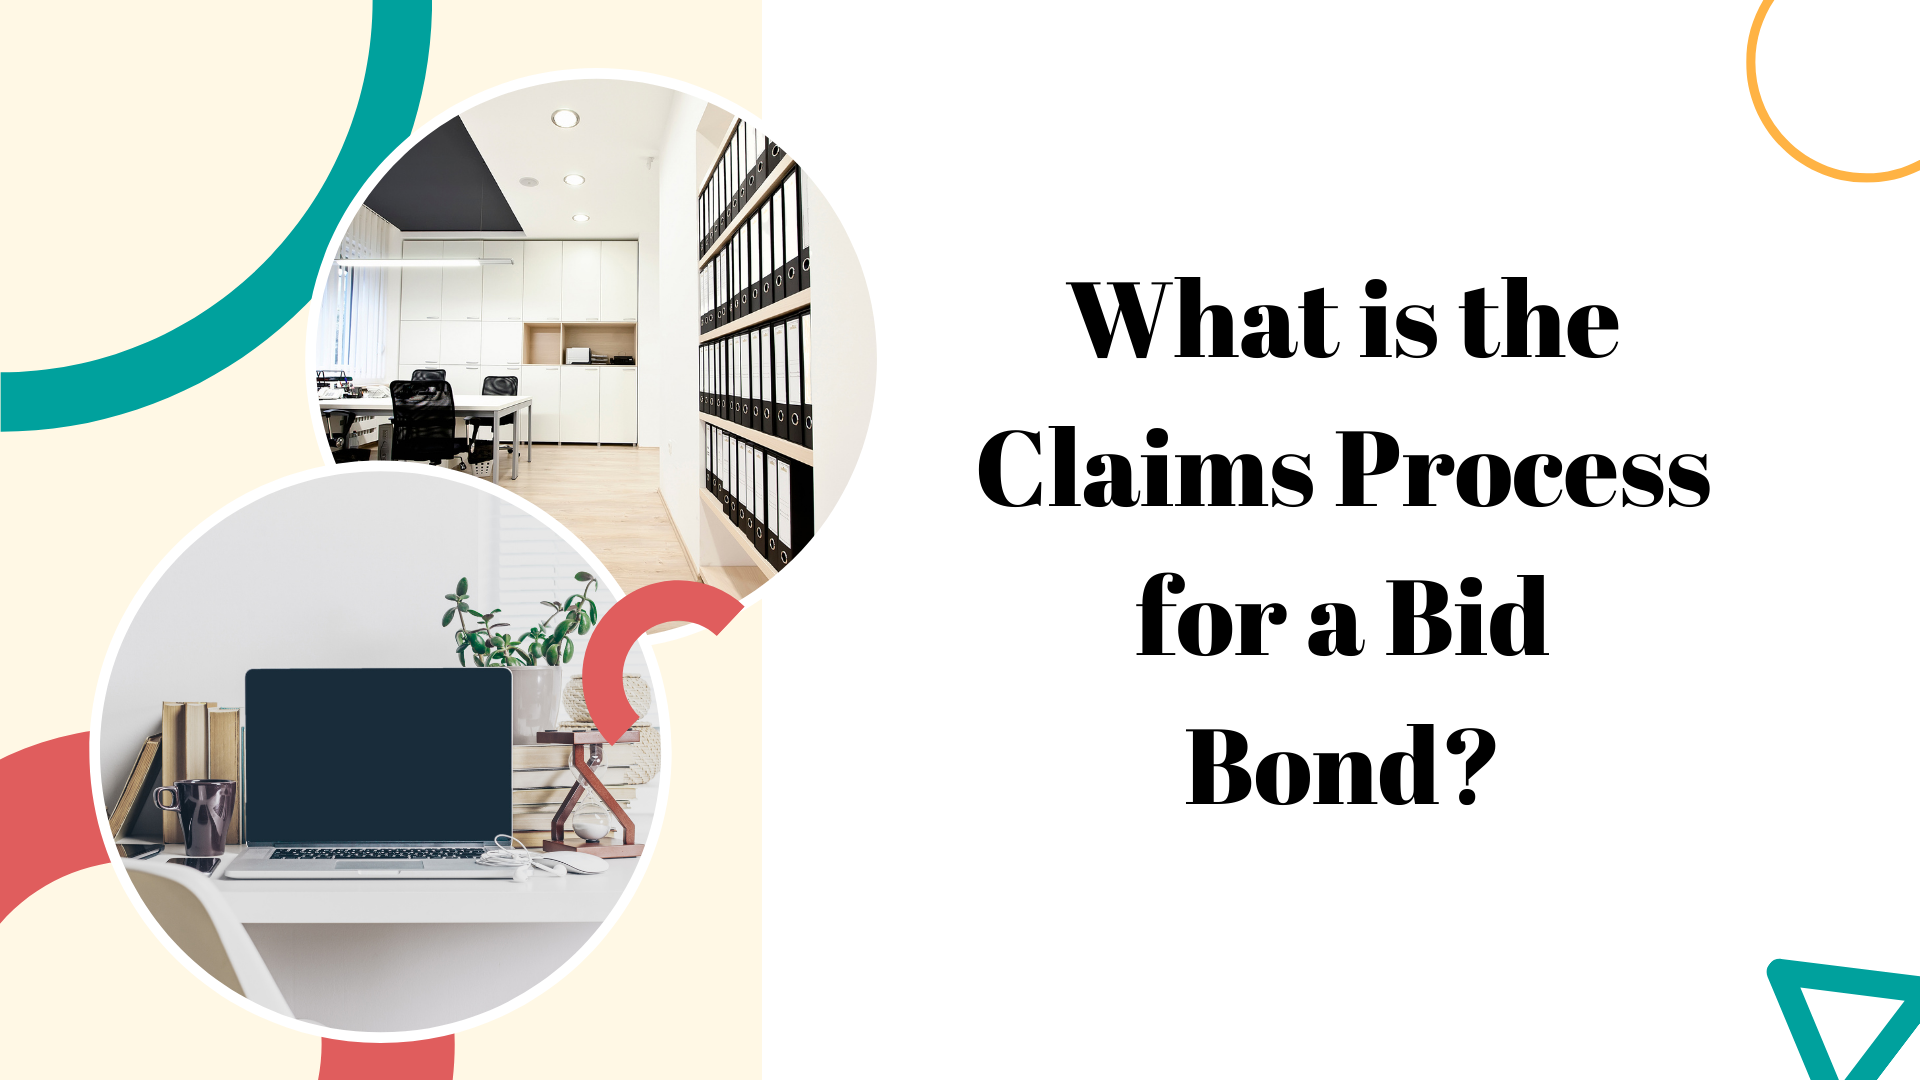 bid bond - How does the Claims Process work for a Bid Bond - office setup